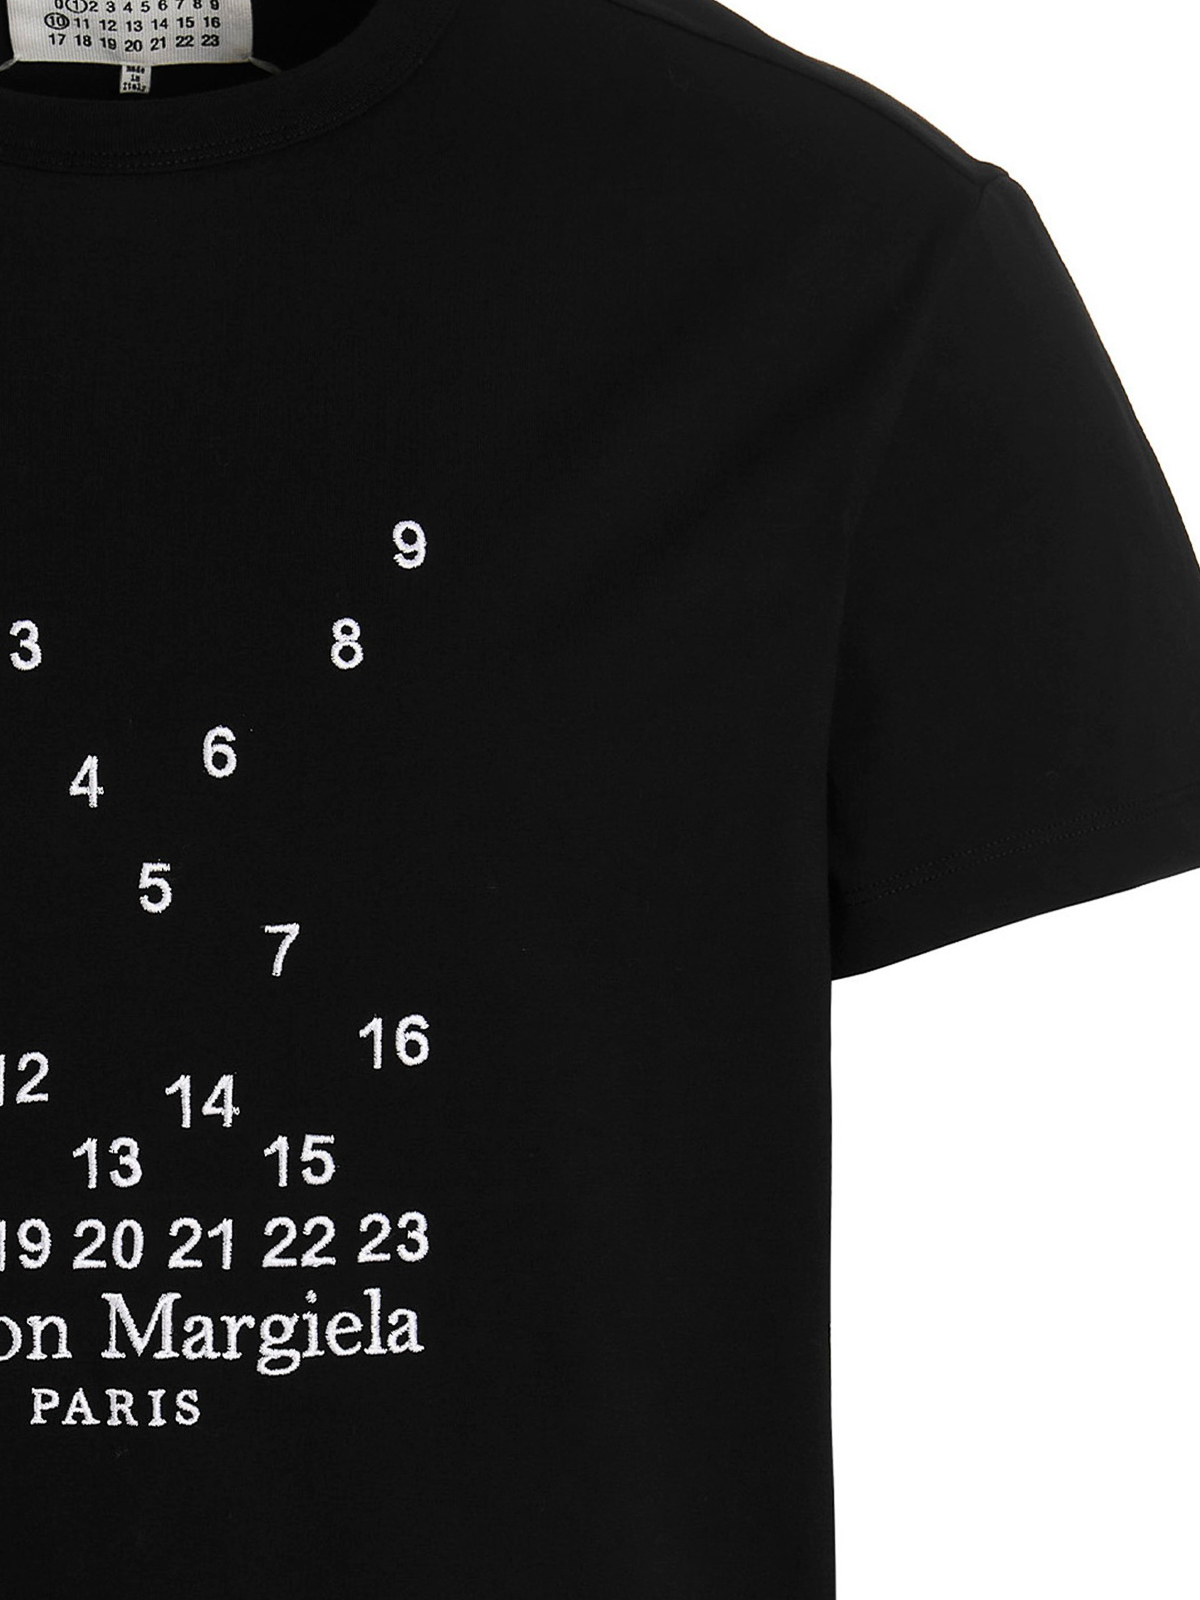 Maison Margiela: Black Embroidered T-Shirt